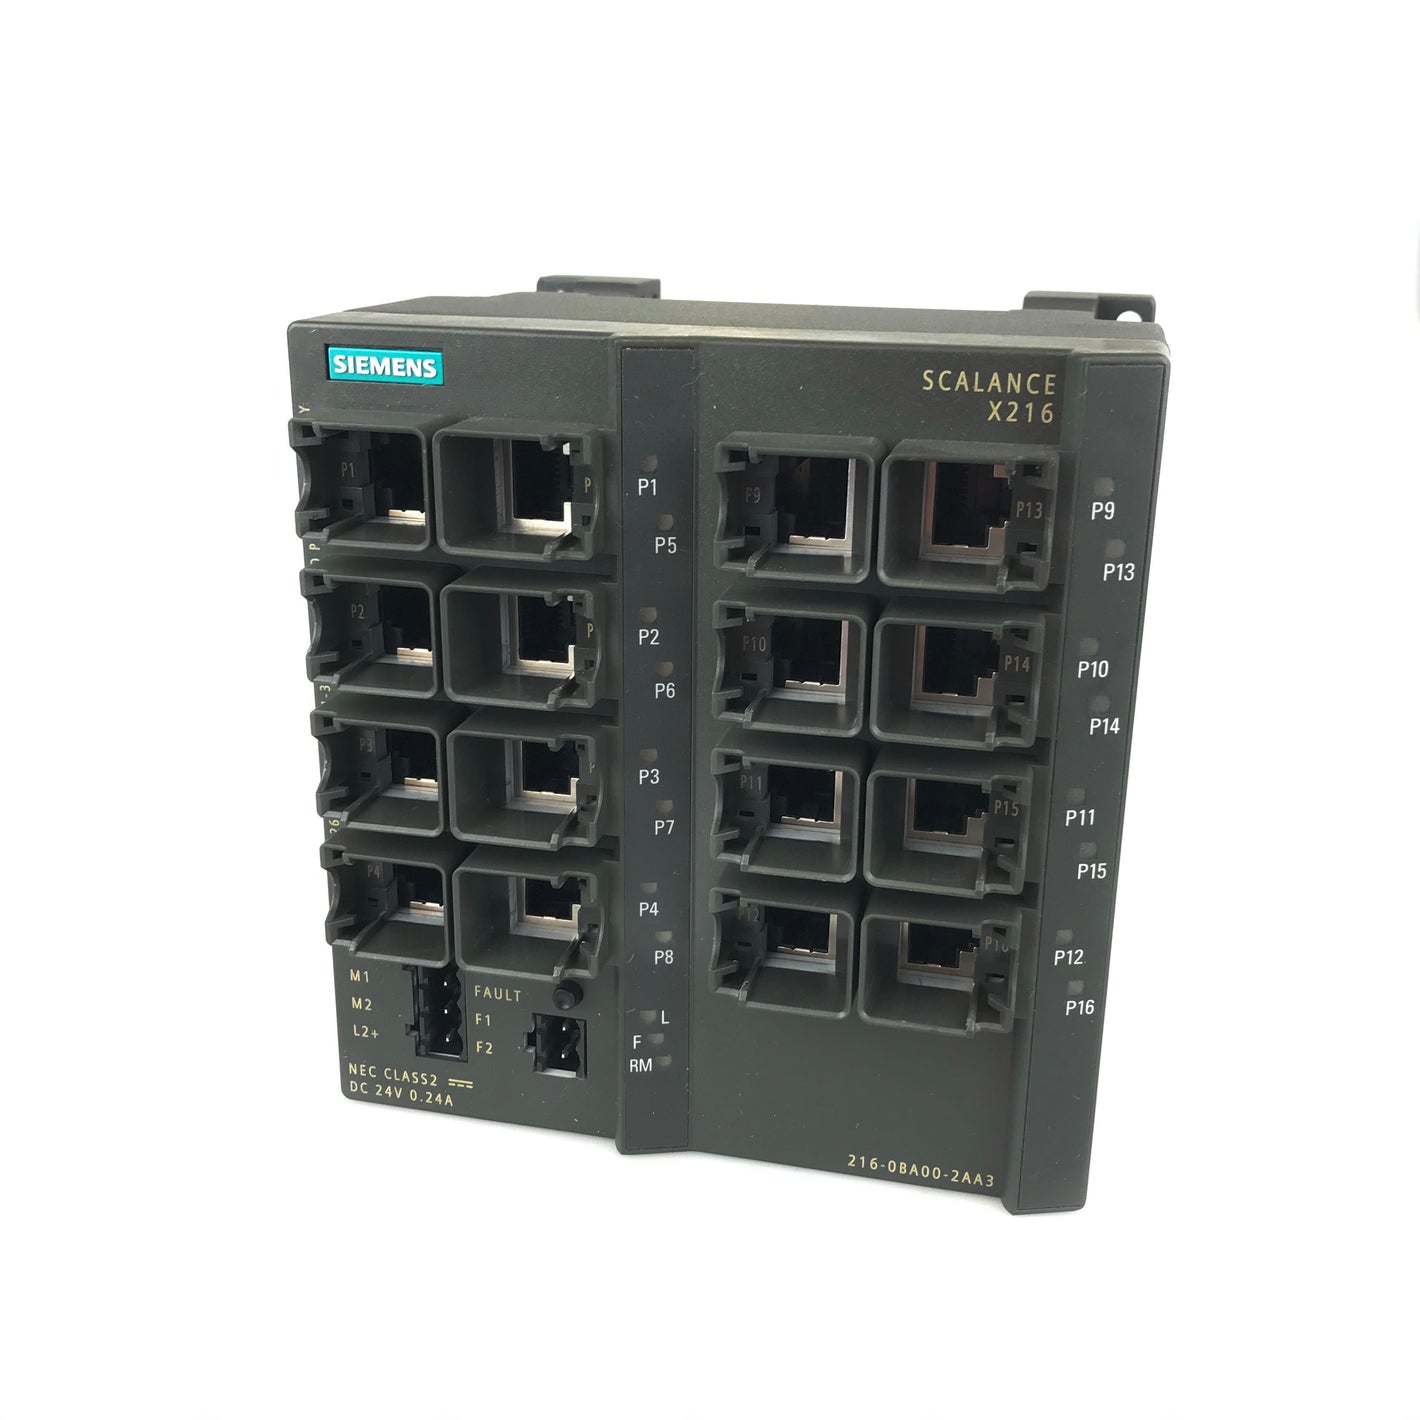 Siemens 6GK5216-0BA00-2AA3 SCALANCE X216 Ethernet Switch